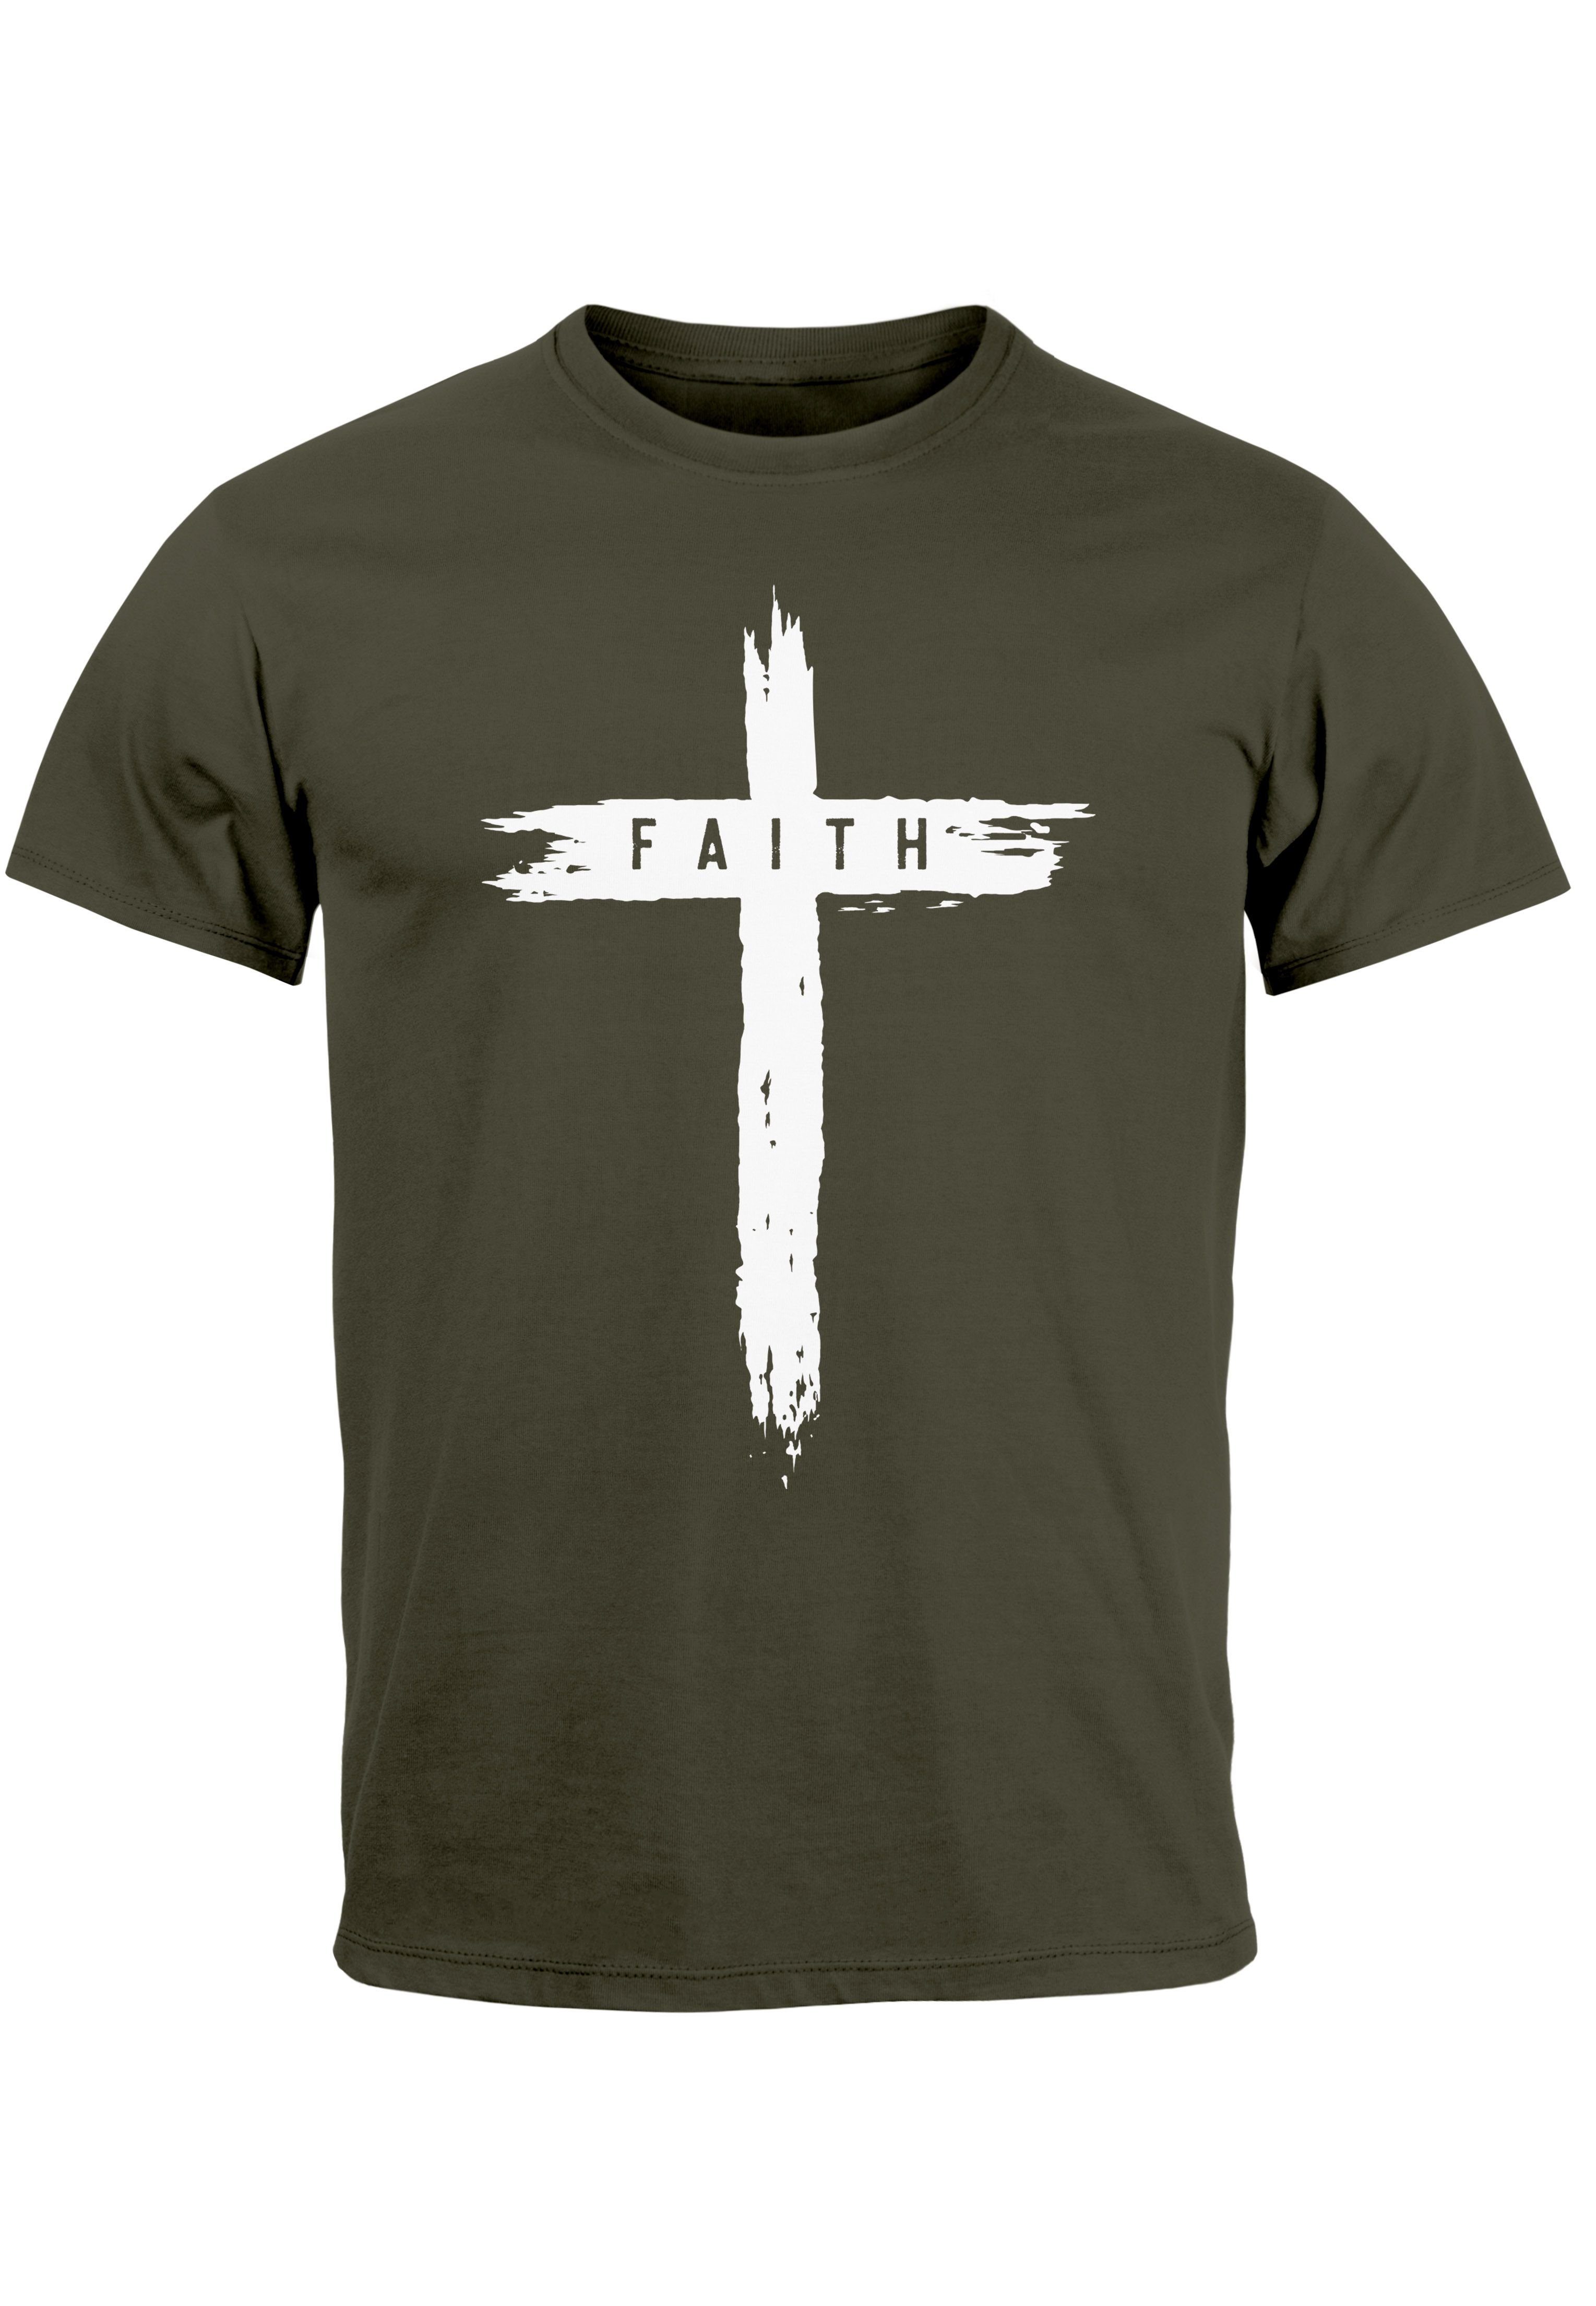 Printshirt T-Shirt Print-Shirt Herren Glaube Print mit Kreuz Aufdruck Neverless Faith Trend-Moti army Cross